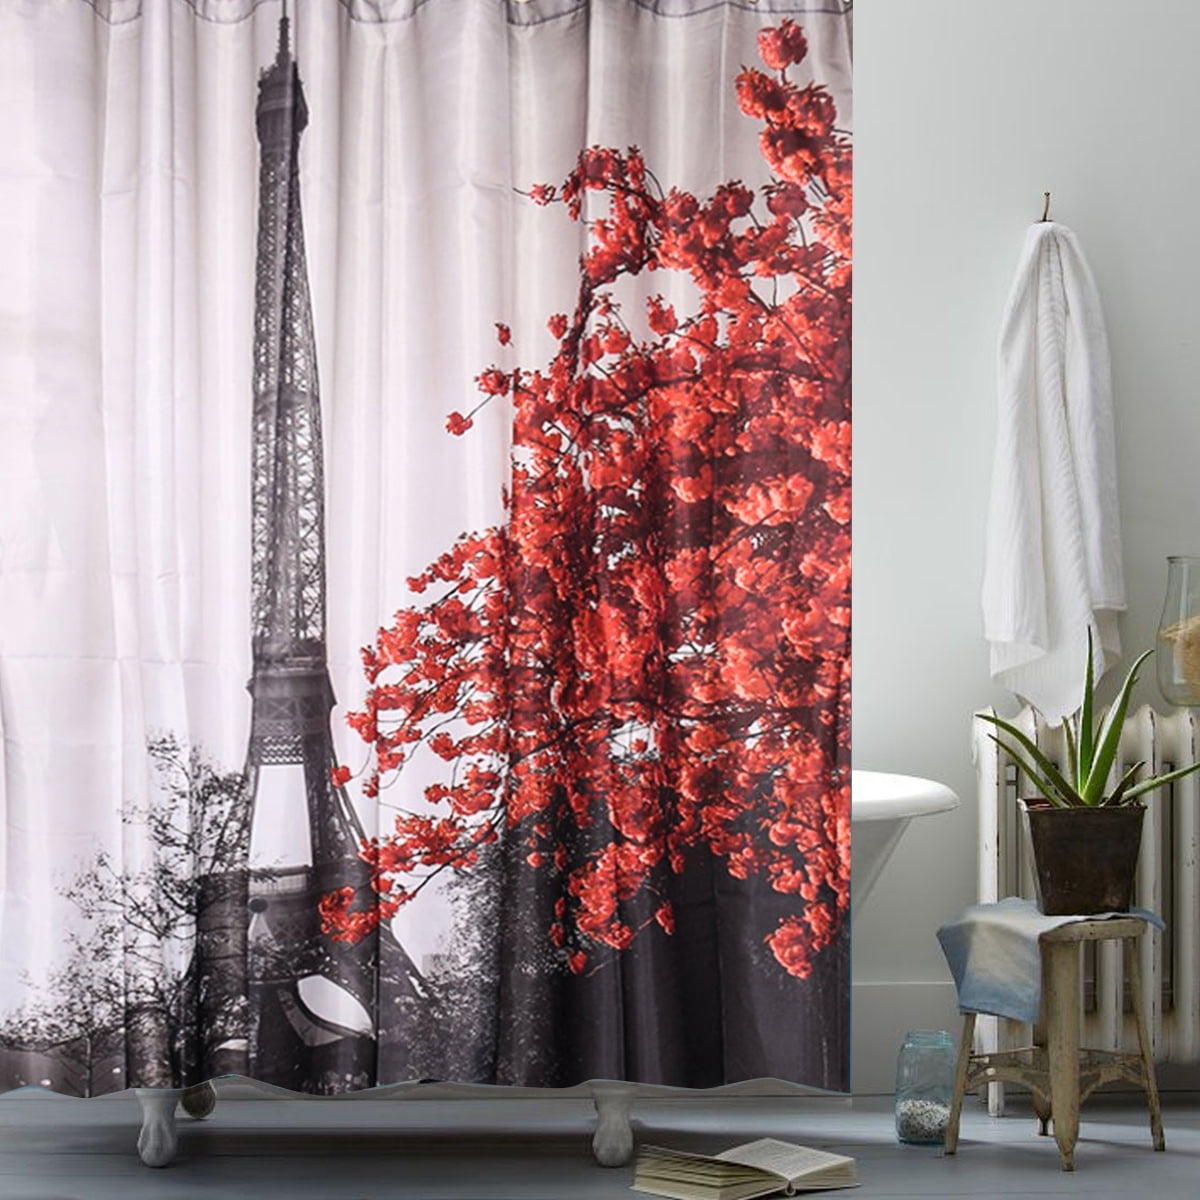 Bathroom Decor Waterproof Fabric Shower Curtain 72" Desert African Women Pattern